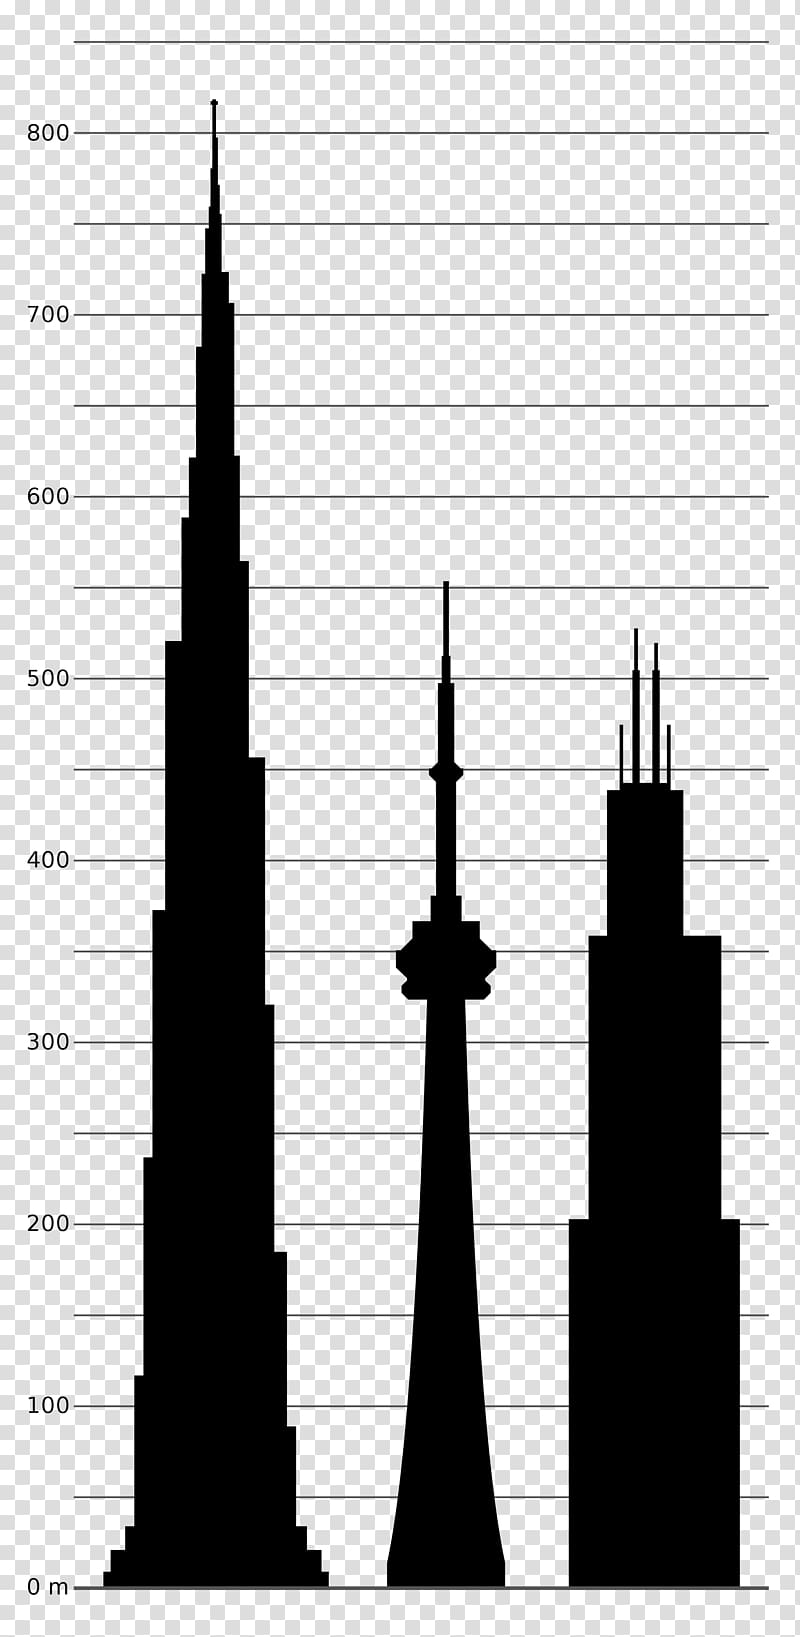 Burj Khalifa Willis Tower CN Tower Canton Tower One World Trade Center, burj khalifa transparent background PNG clipart